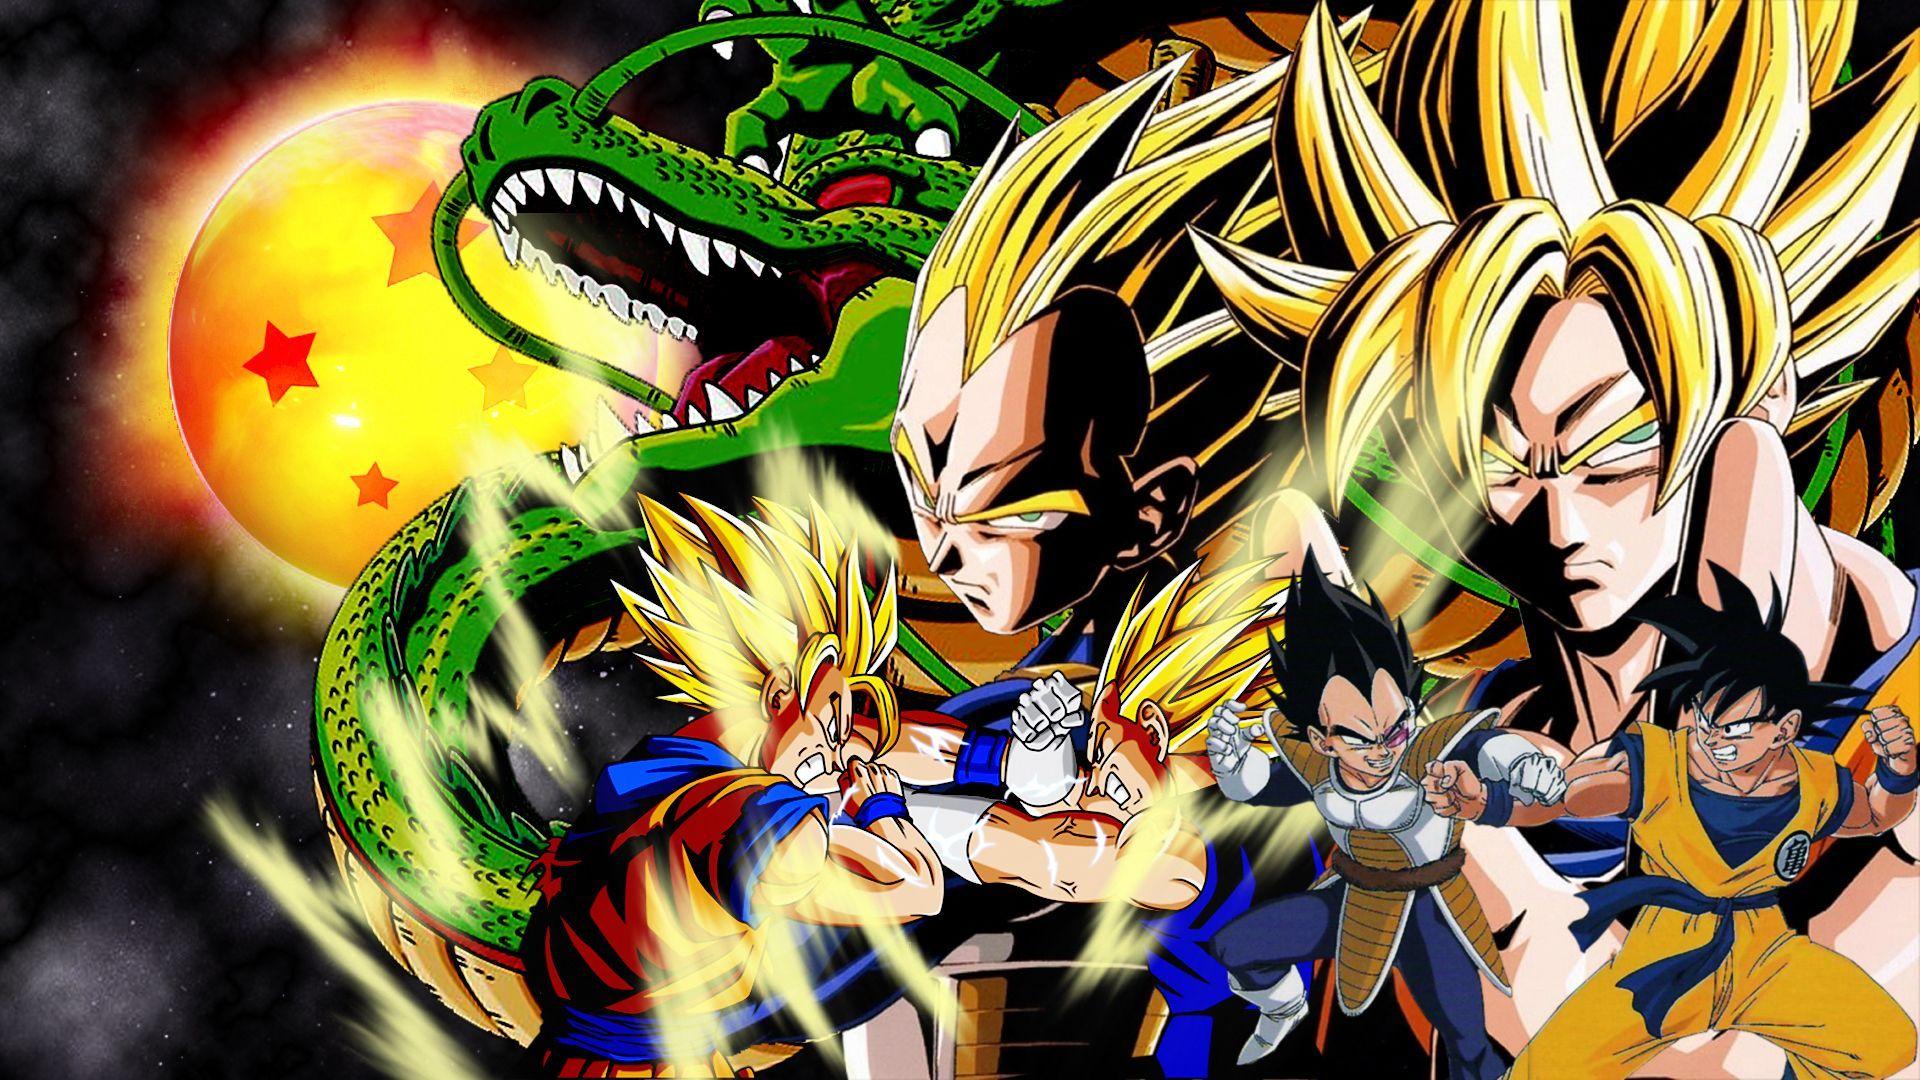 dbz goku vs vegeta. Goku wallpaper, Dragon ball art, Dragon ball super wallpaper